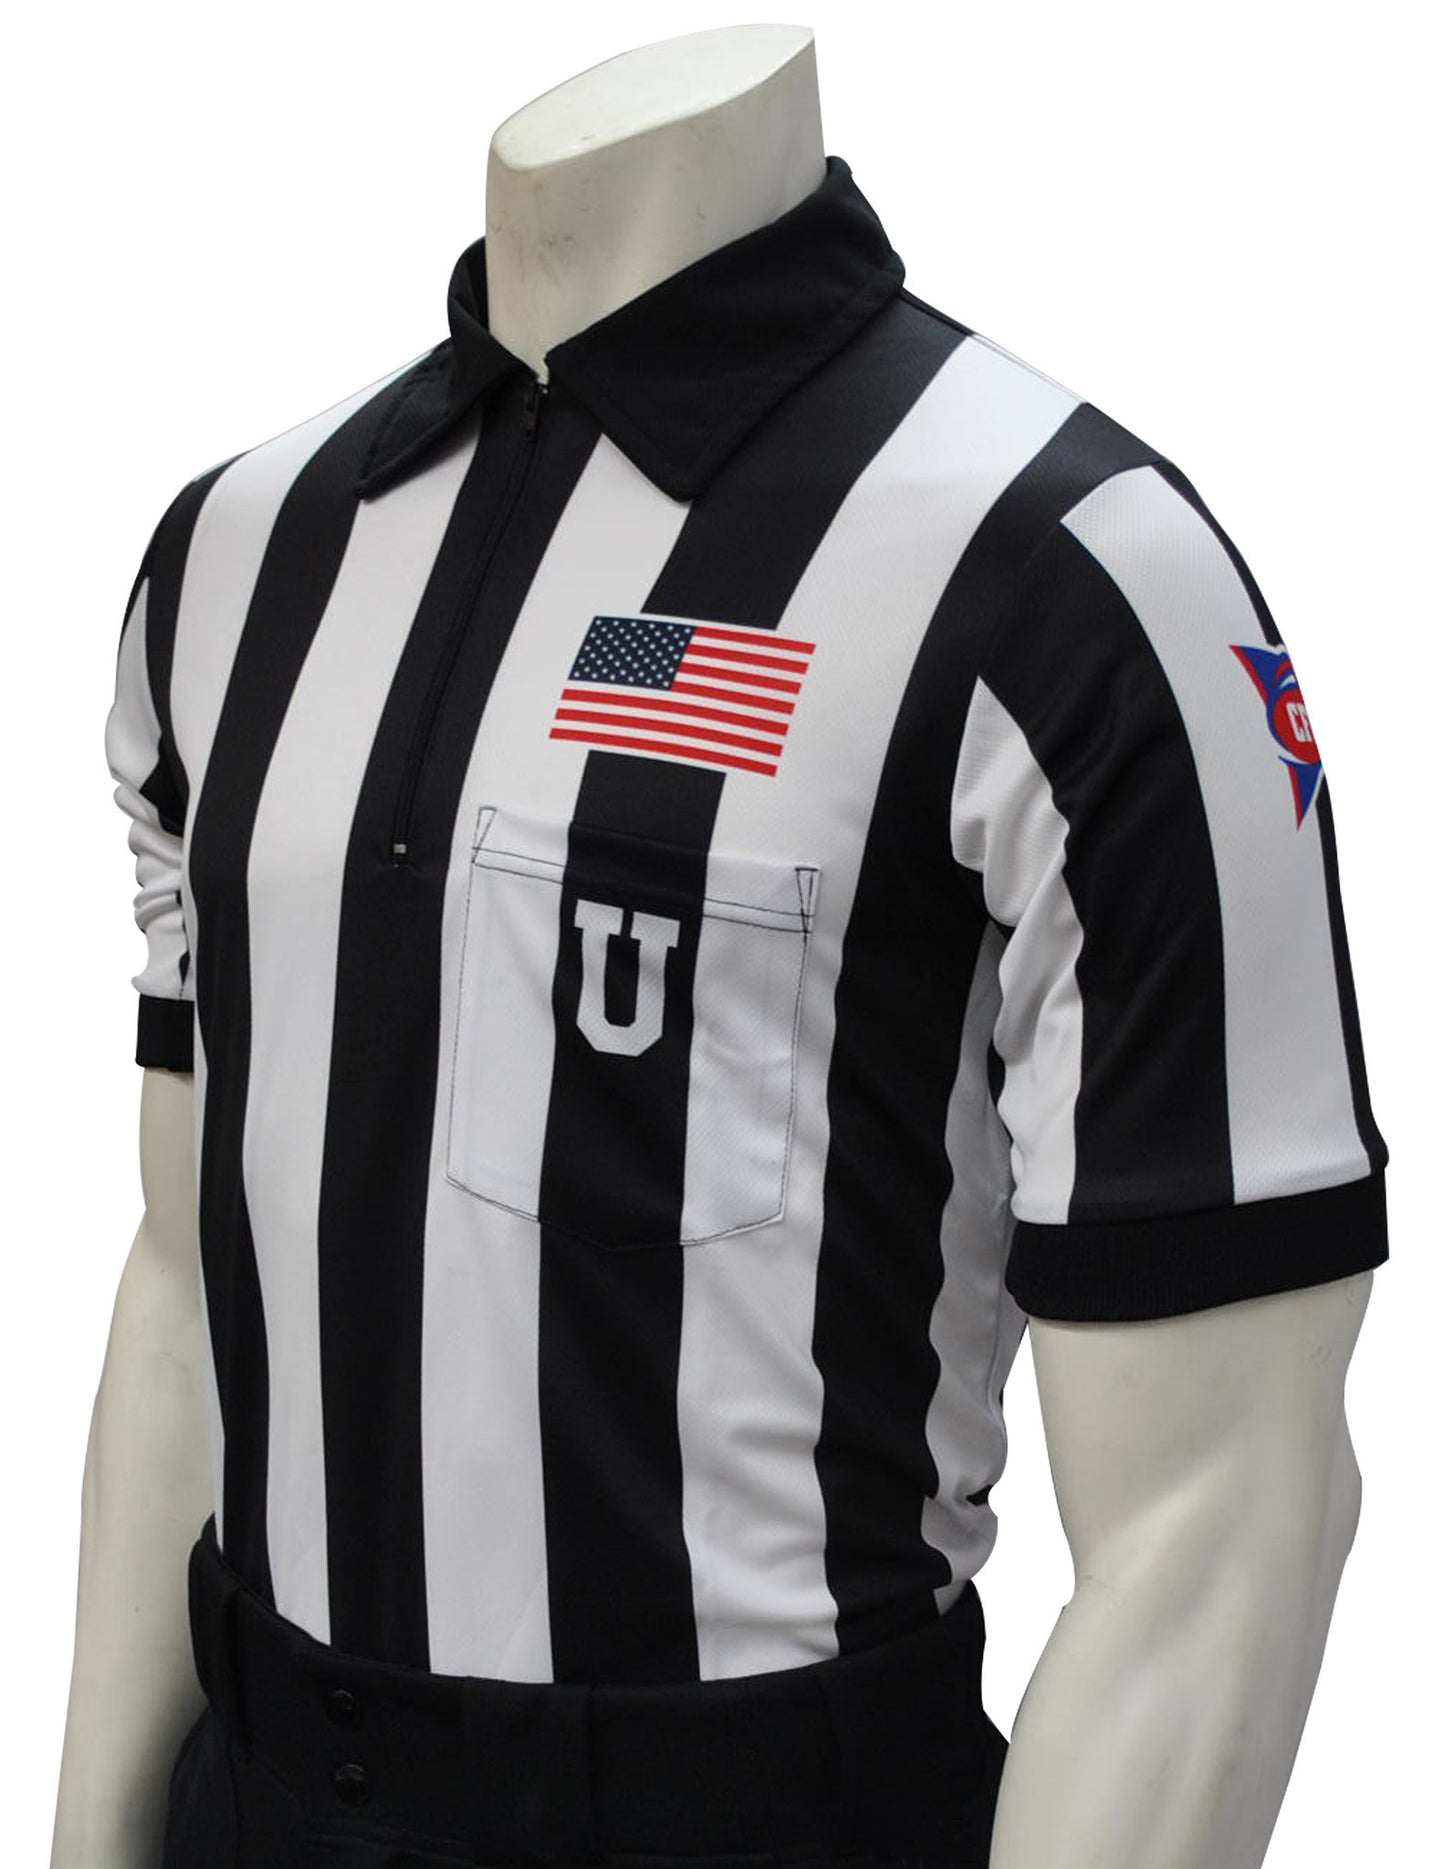 USA115CFO-607 - Smitty USA "BODY FLEX" CFO Football Short Sleeve Shirt